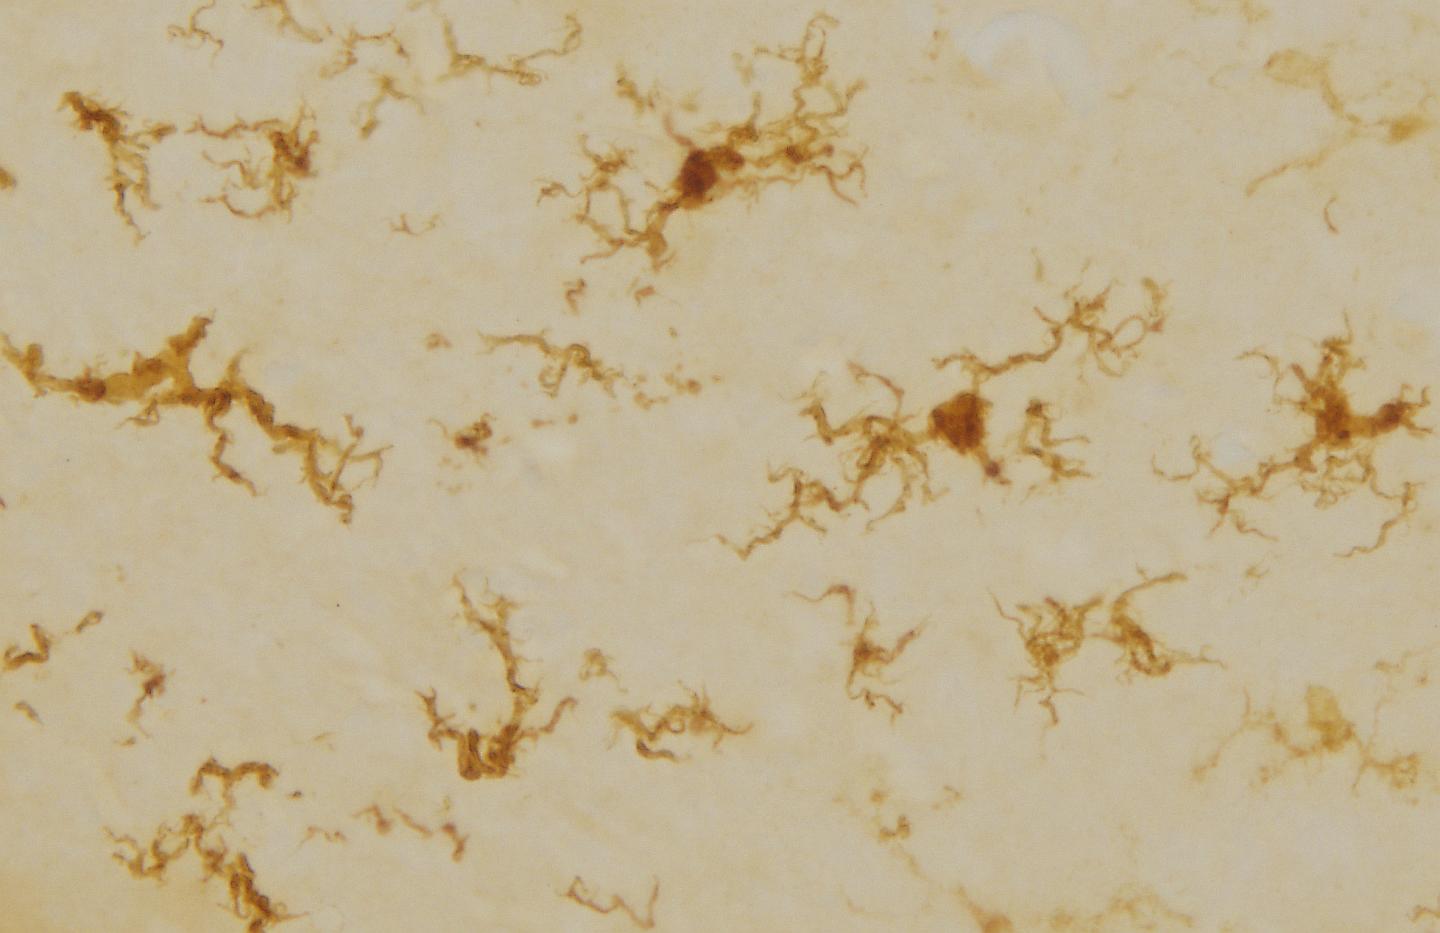 Regenerated Microglia